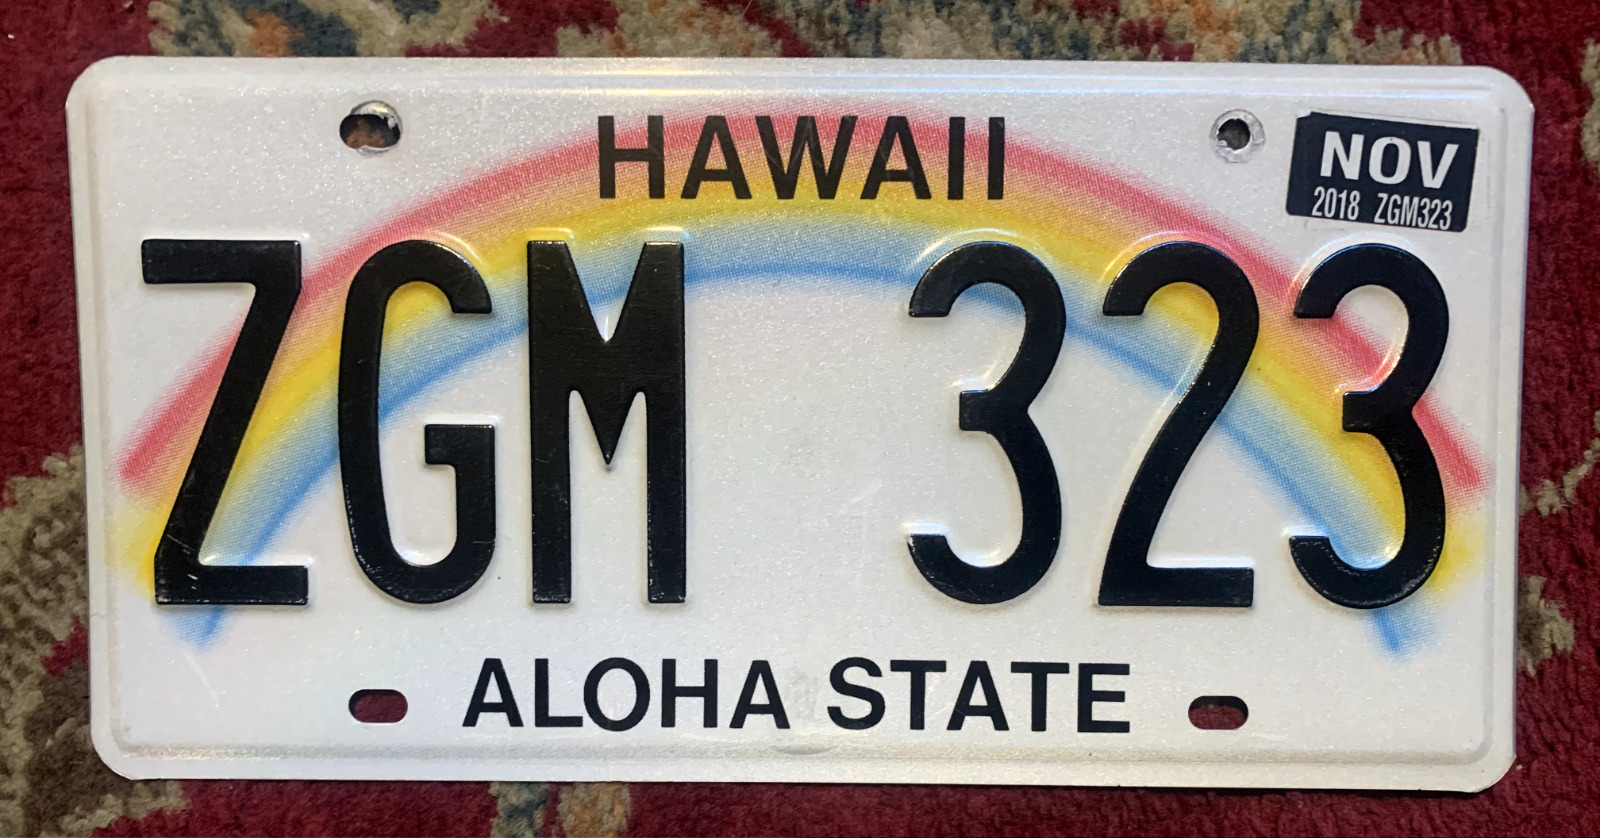 HAWAII LICENSE PLATE GRAPHIC RAINBOW 🌈 ALOHA STATE RANDOM LETTERS/NUMBERS HI.